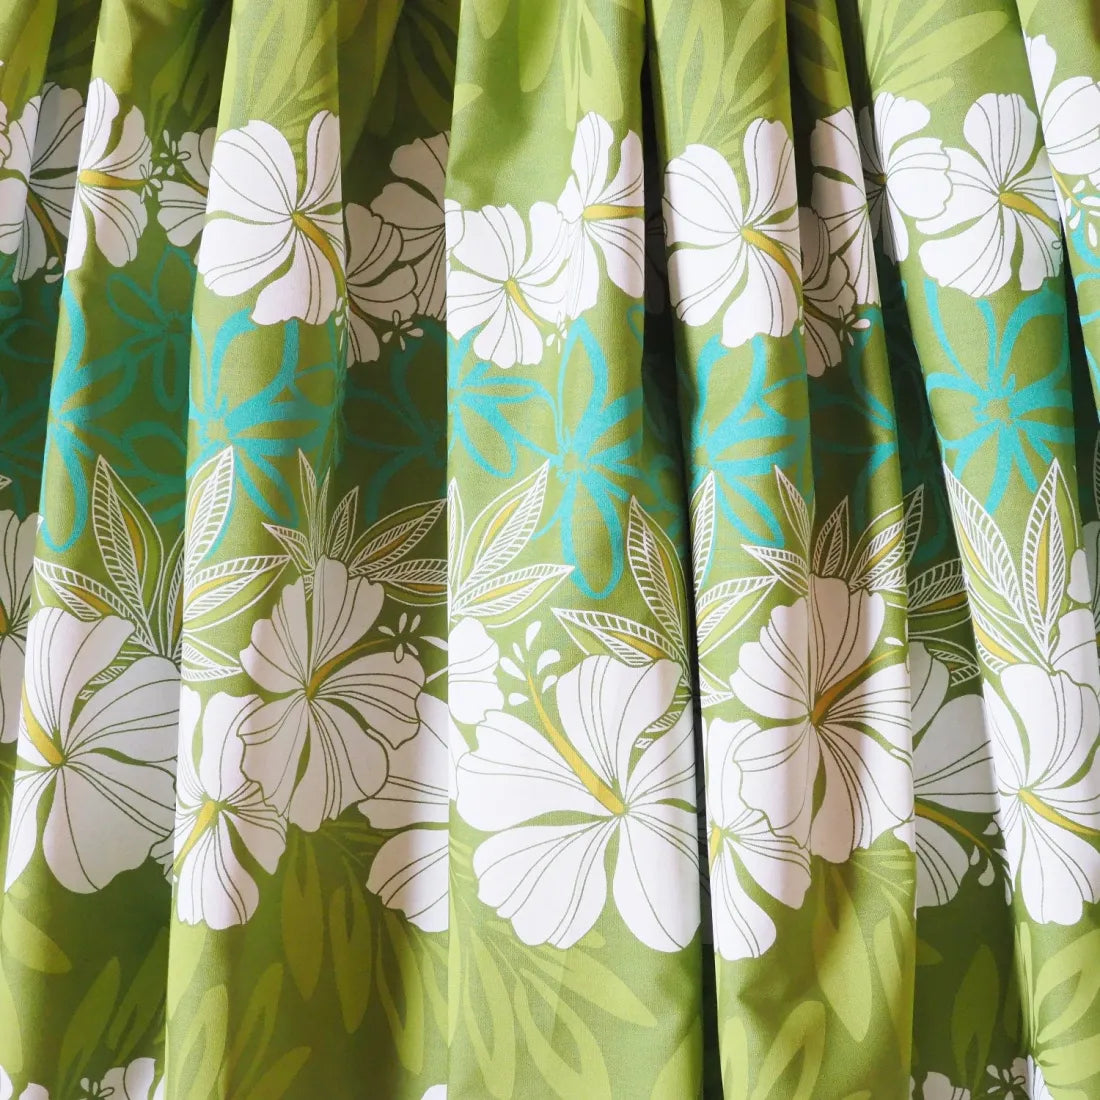 Aloha Lei Green Single Pa’u Hawaiian Hula Skirt - Made In Hawaii